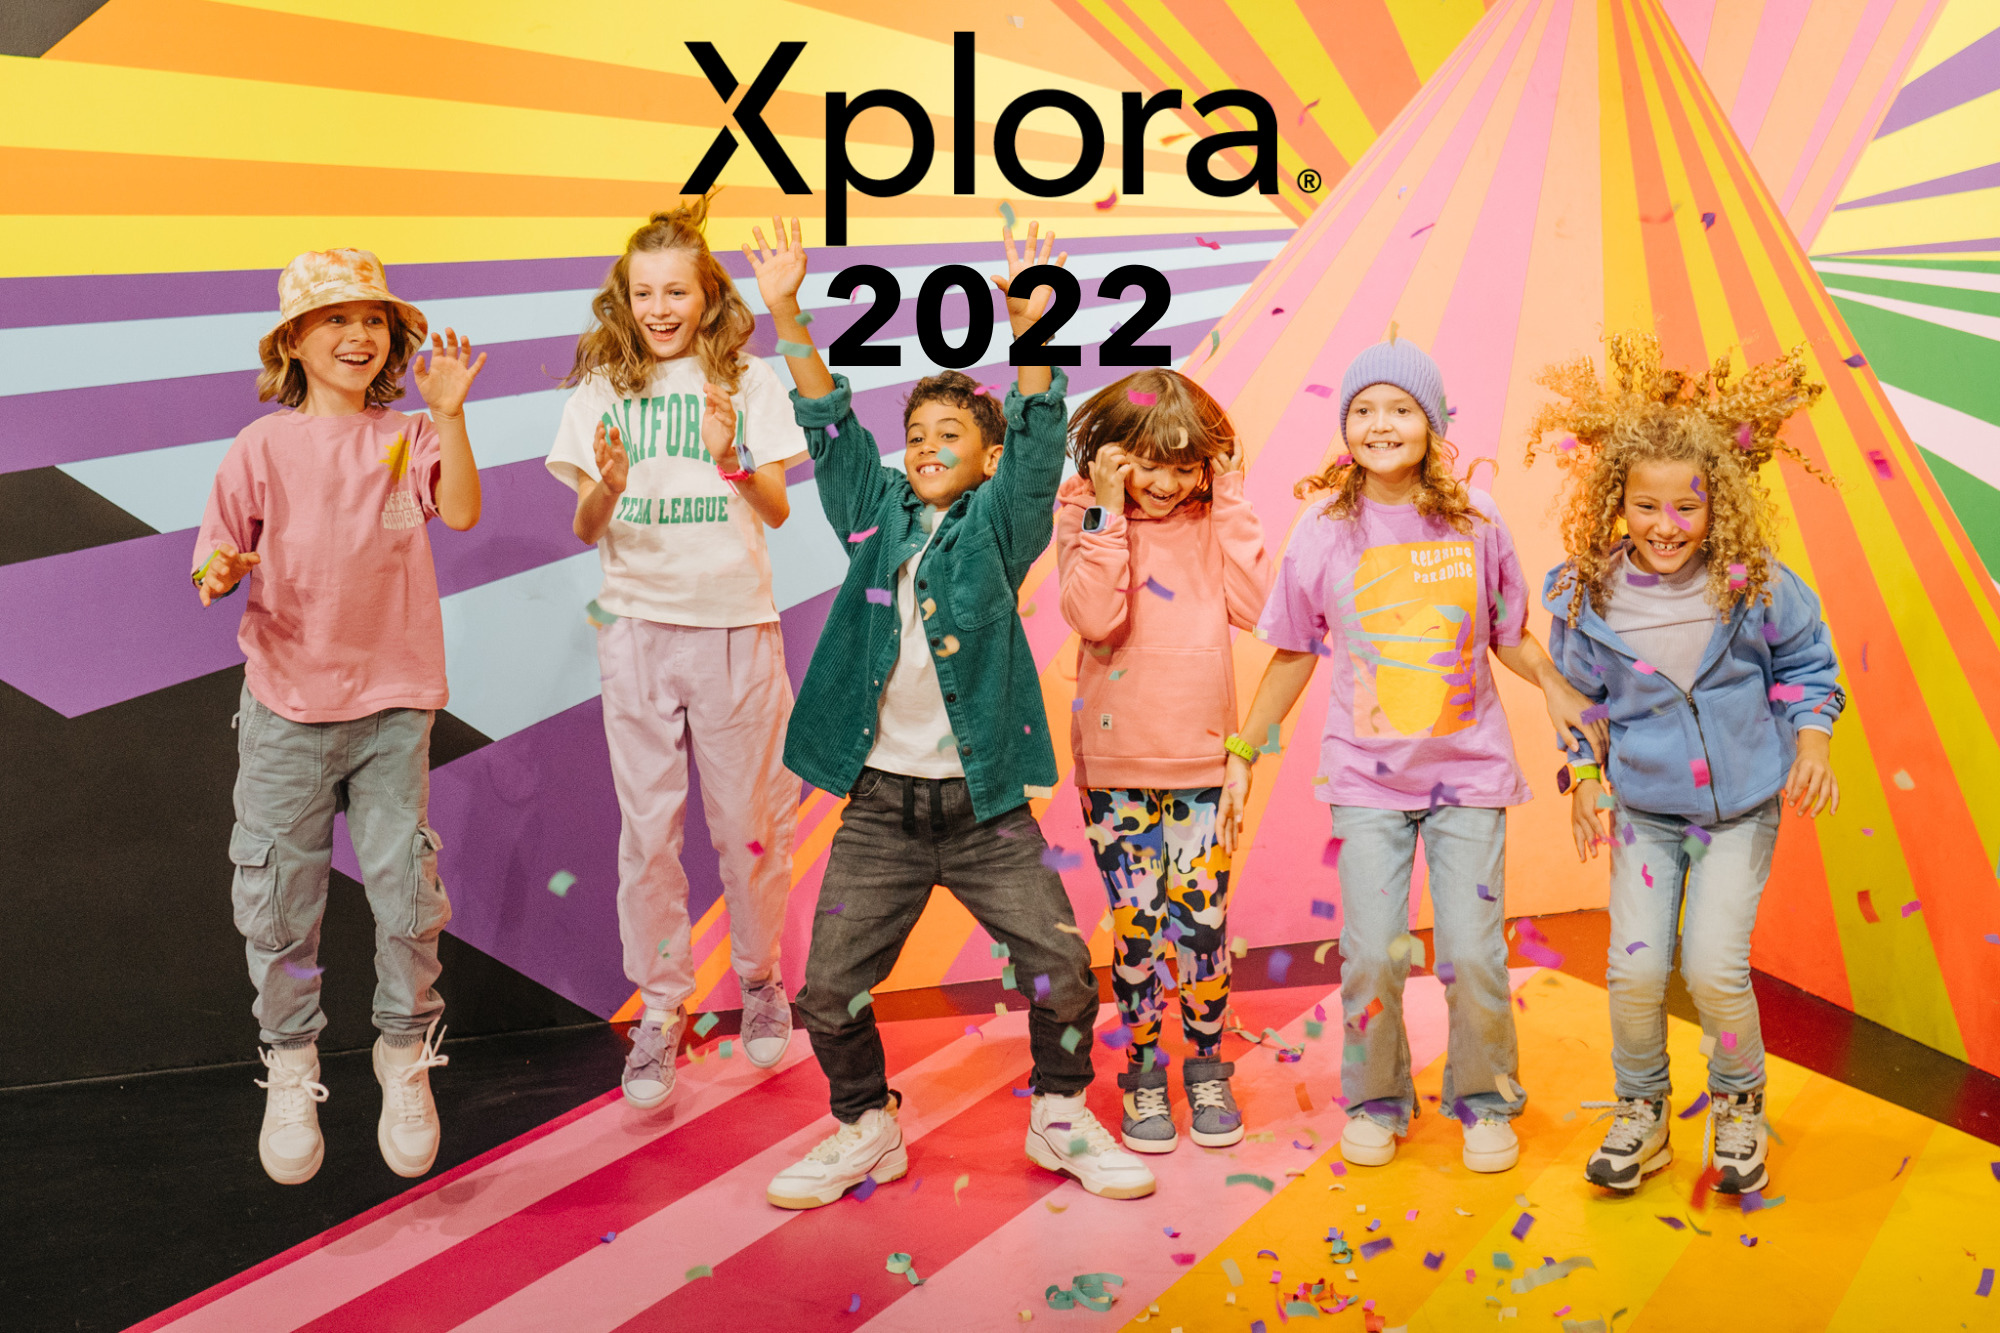 Xplora’s højdepunkter i 2022